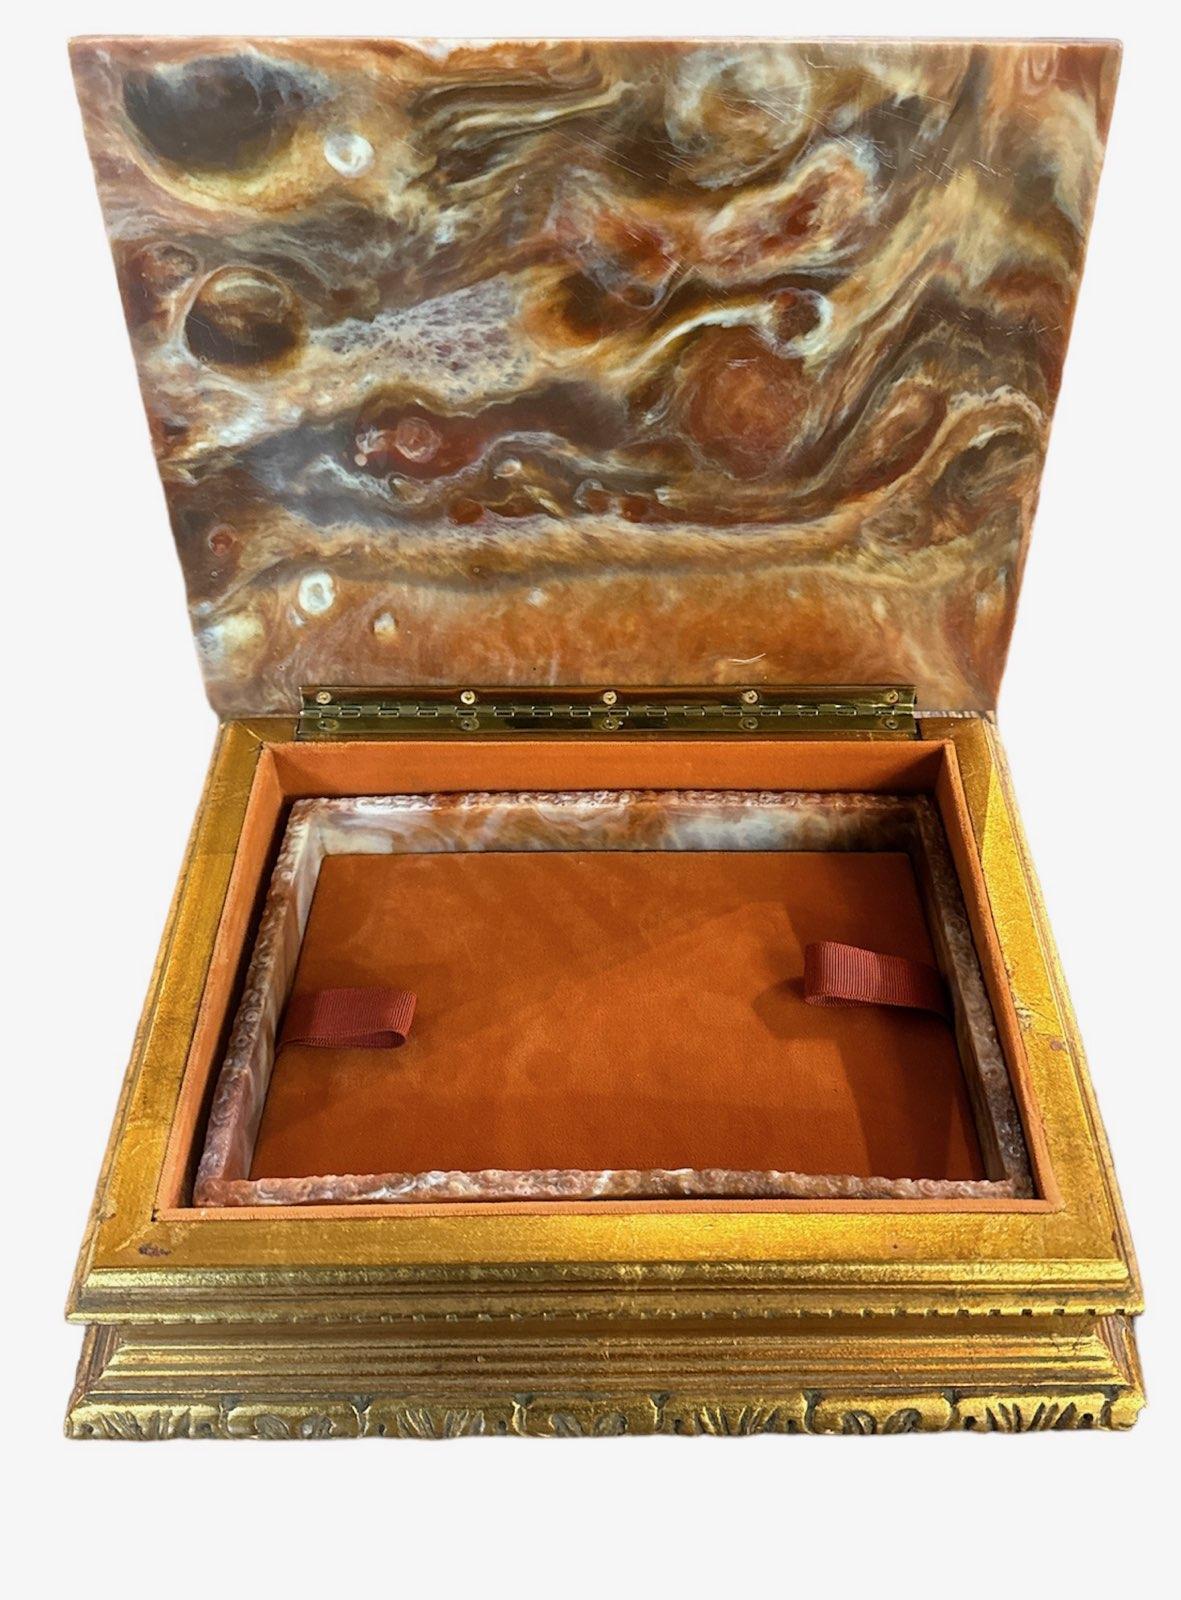 incolay stone box